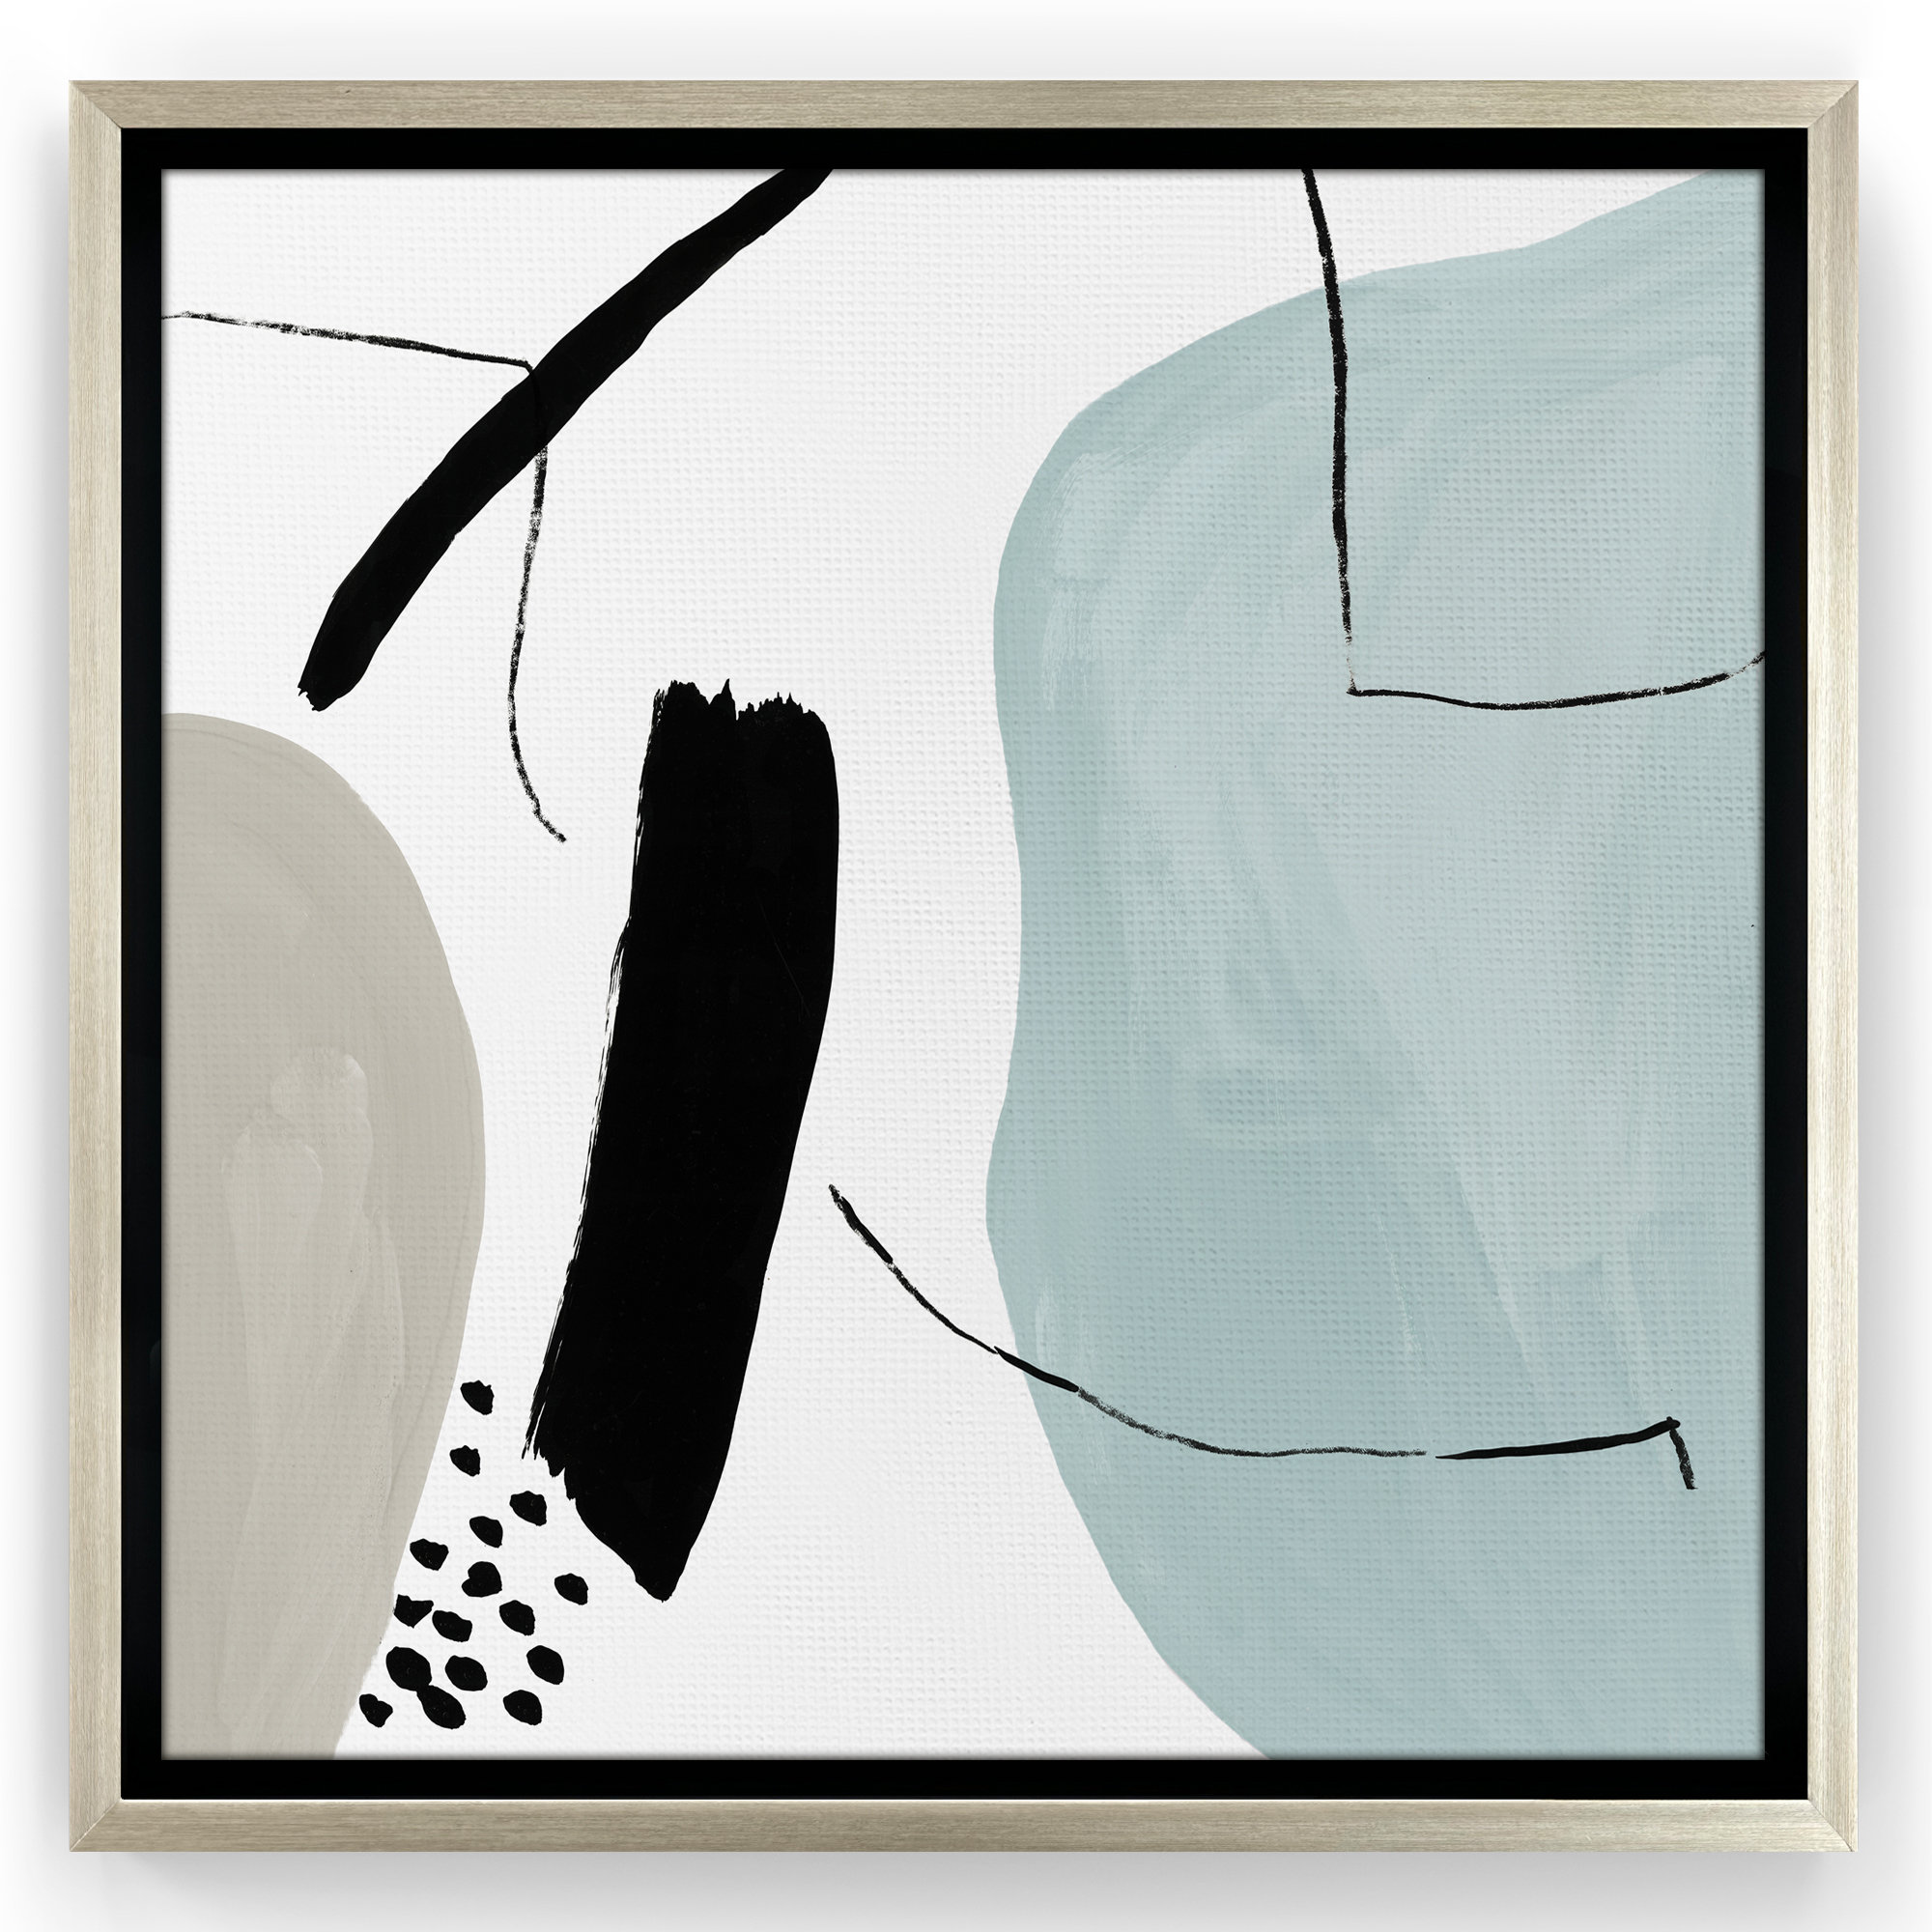 Wrought Studio Integral Ii by PI Creative Art Modern Wall Art Decor -  Floating Canvas Frame